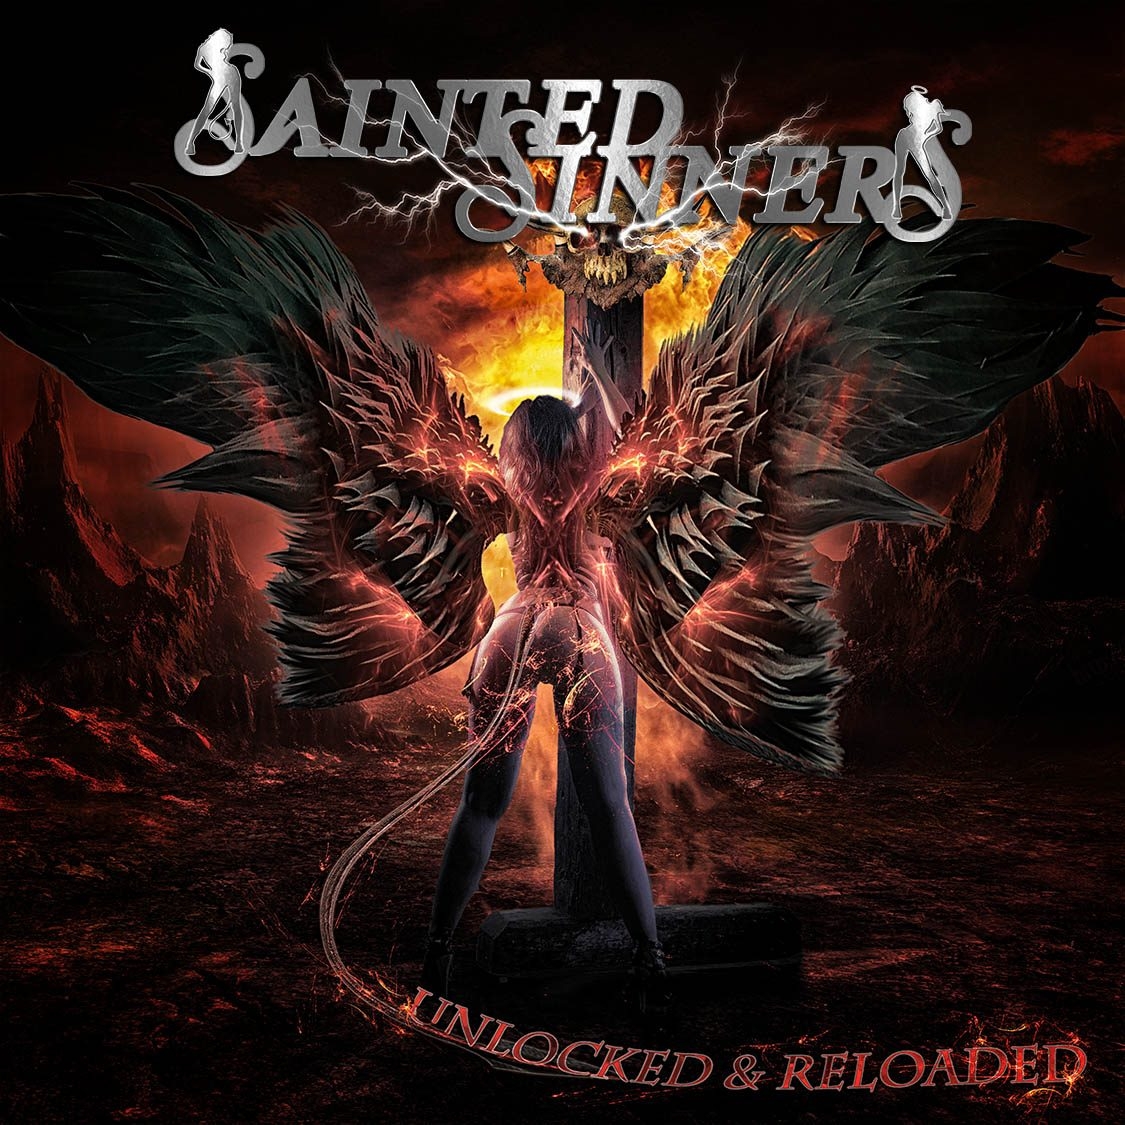 Review: Sainted Sinners Unlocked & Reloaded